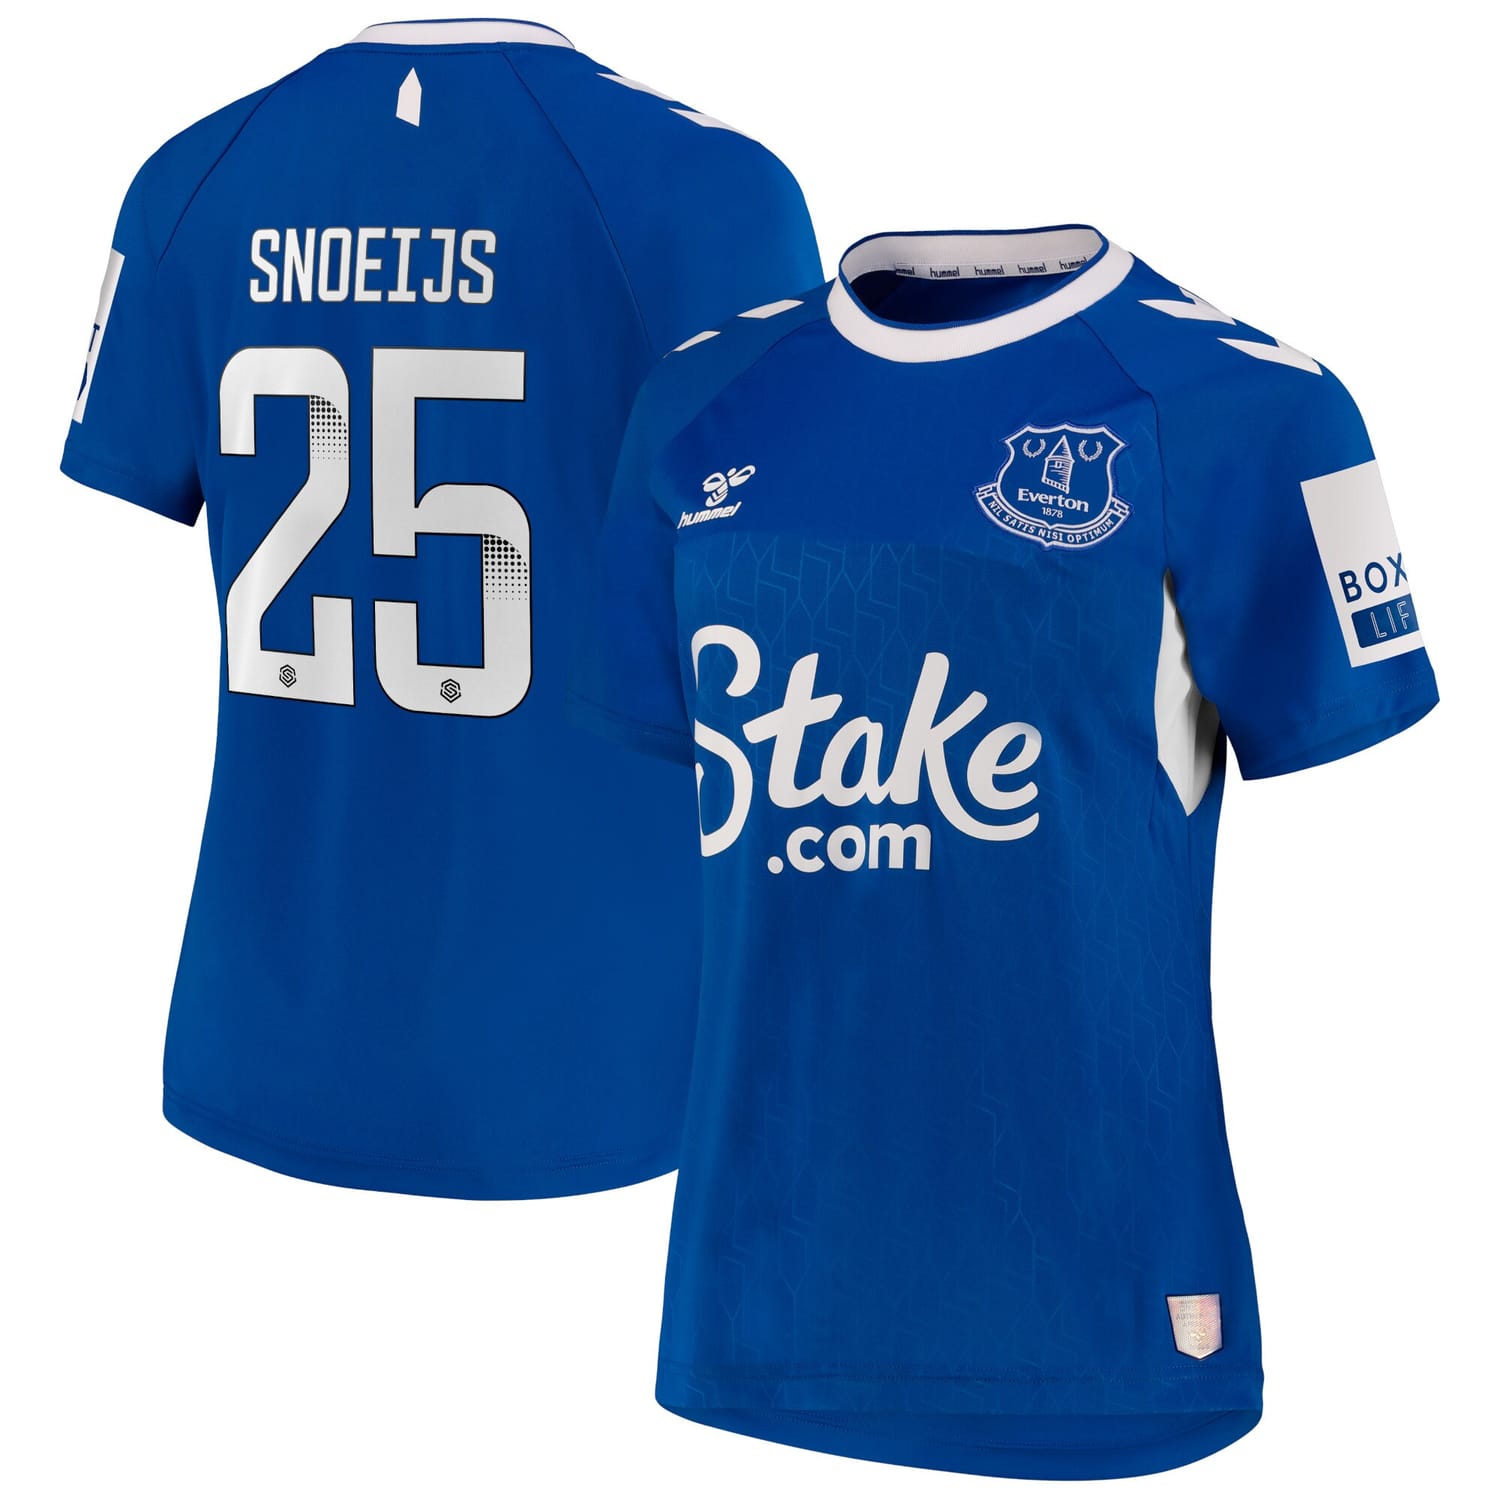 Premier League Everton Home WSL Jersey Shirt 2022-23 player Katja Snoeijs 25 printing for Women